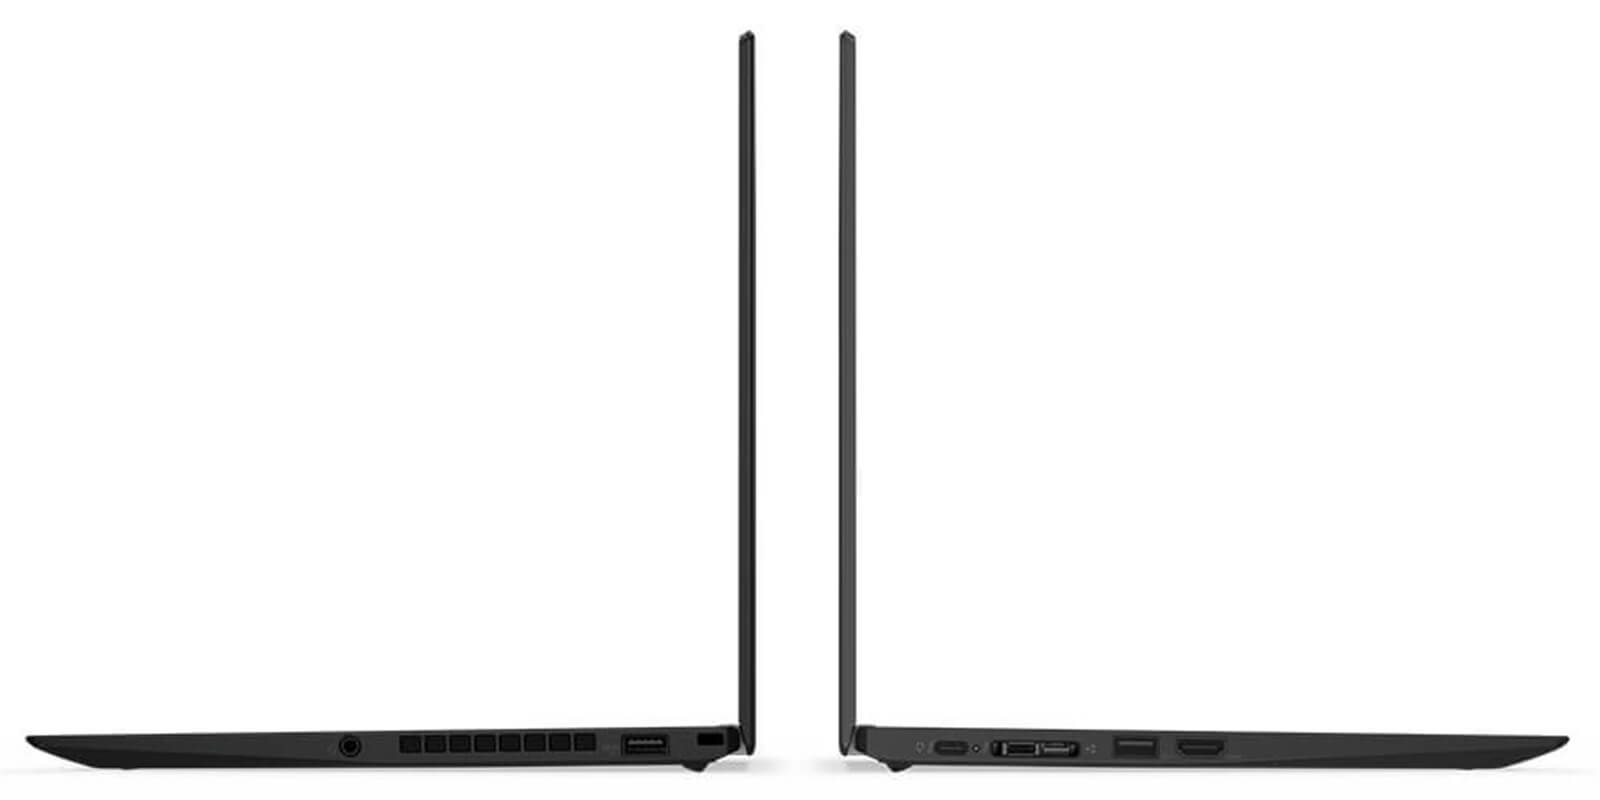 Laptop Lenovo ThinkPad X1 Carbon Gen 6 Core i5-8250U, Ram 8GB, SSD 512GB, 14 inch QHD